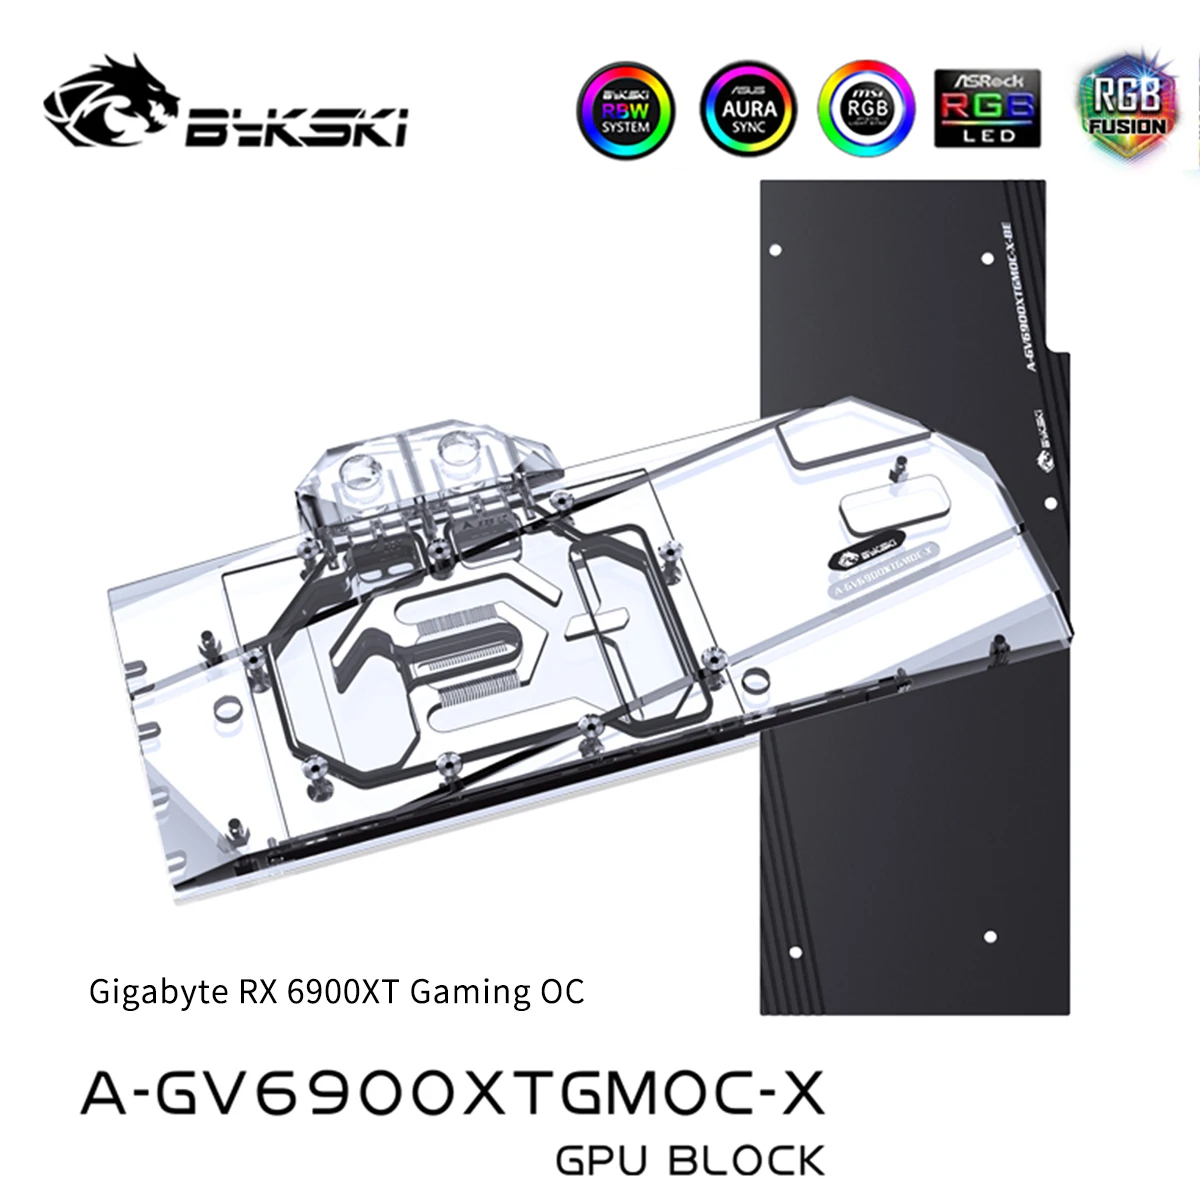 

Bykski GPU Water Block with Backplate for GIGABYTE RX 6900XT Gaming OC VGA Liquid Cooler, 5V/12V RGB SYNC, A-GV6900XTGMOC-X